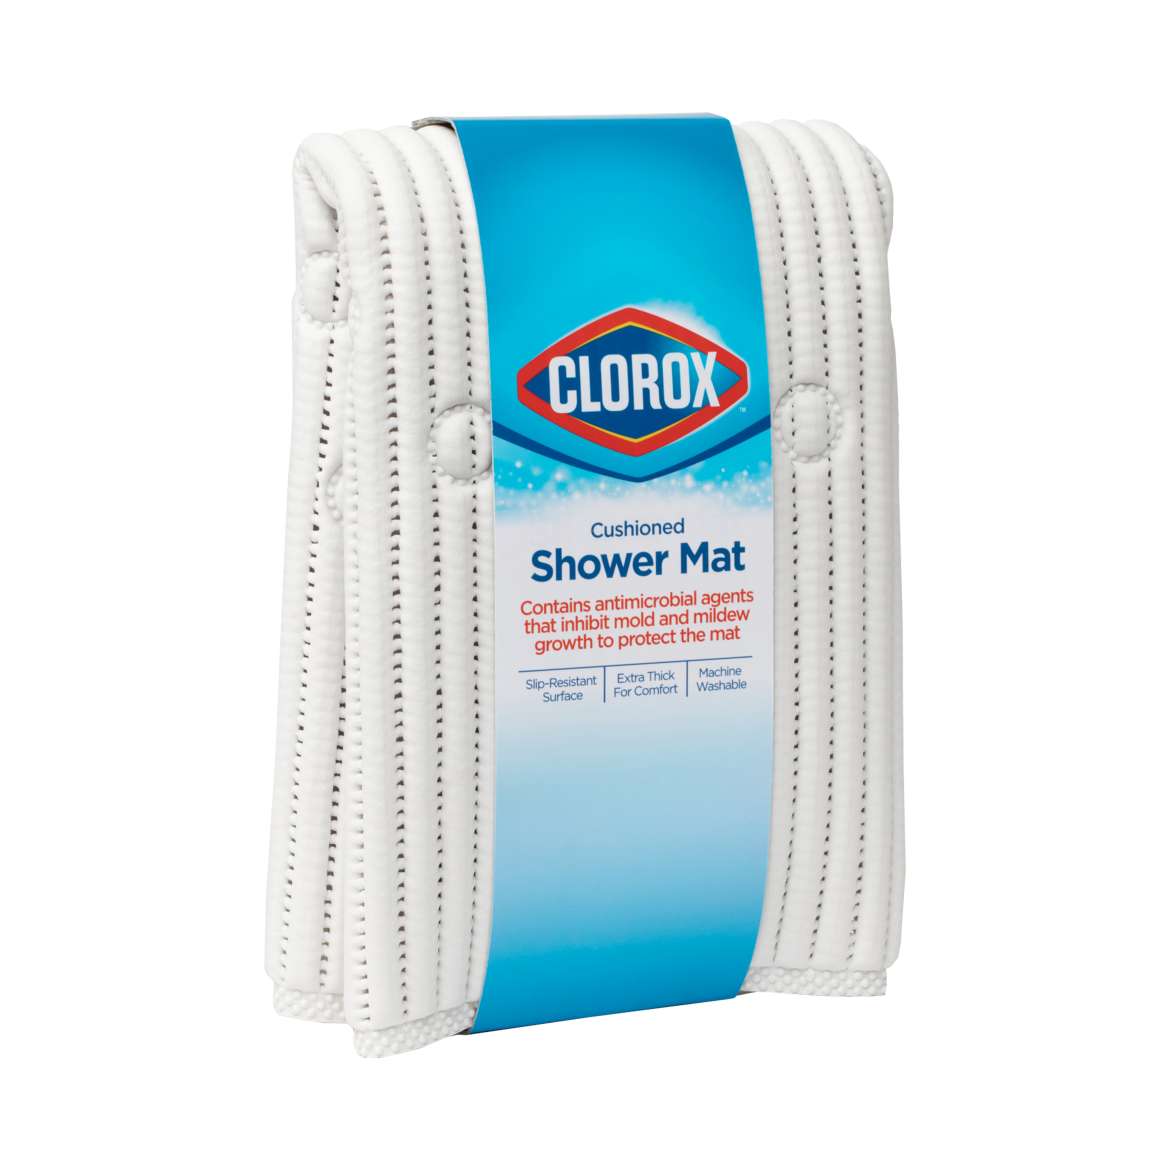 Clorox™ Cushioned Shower Mat